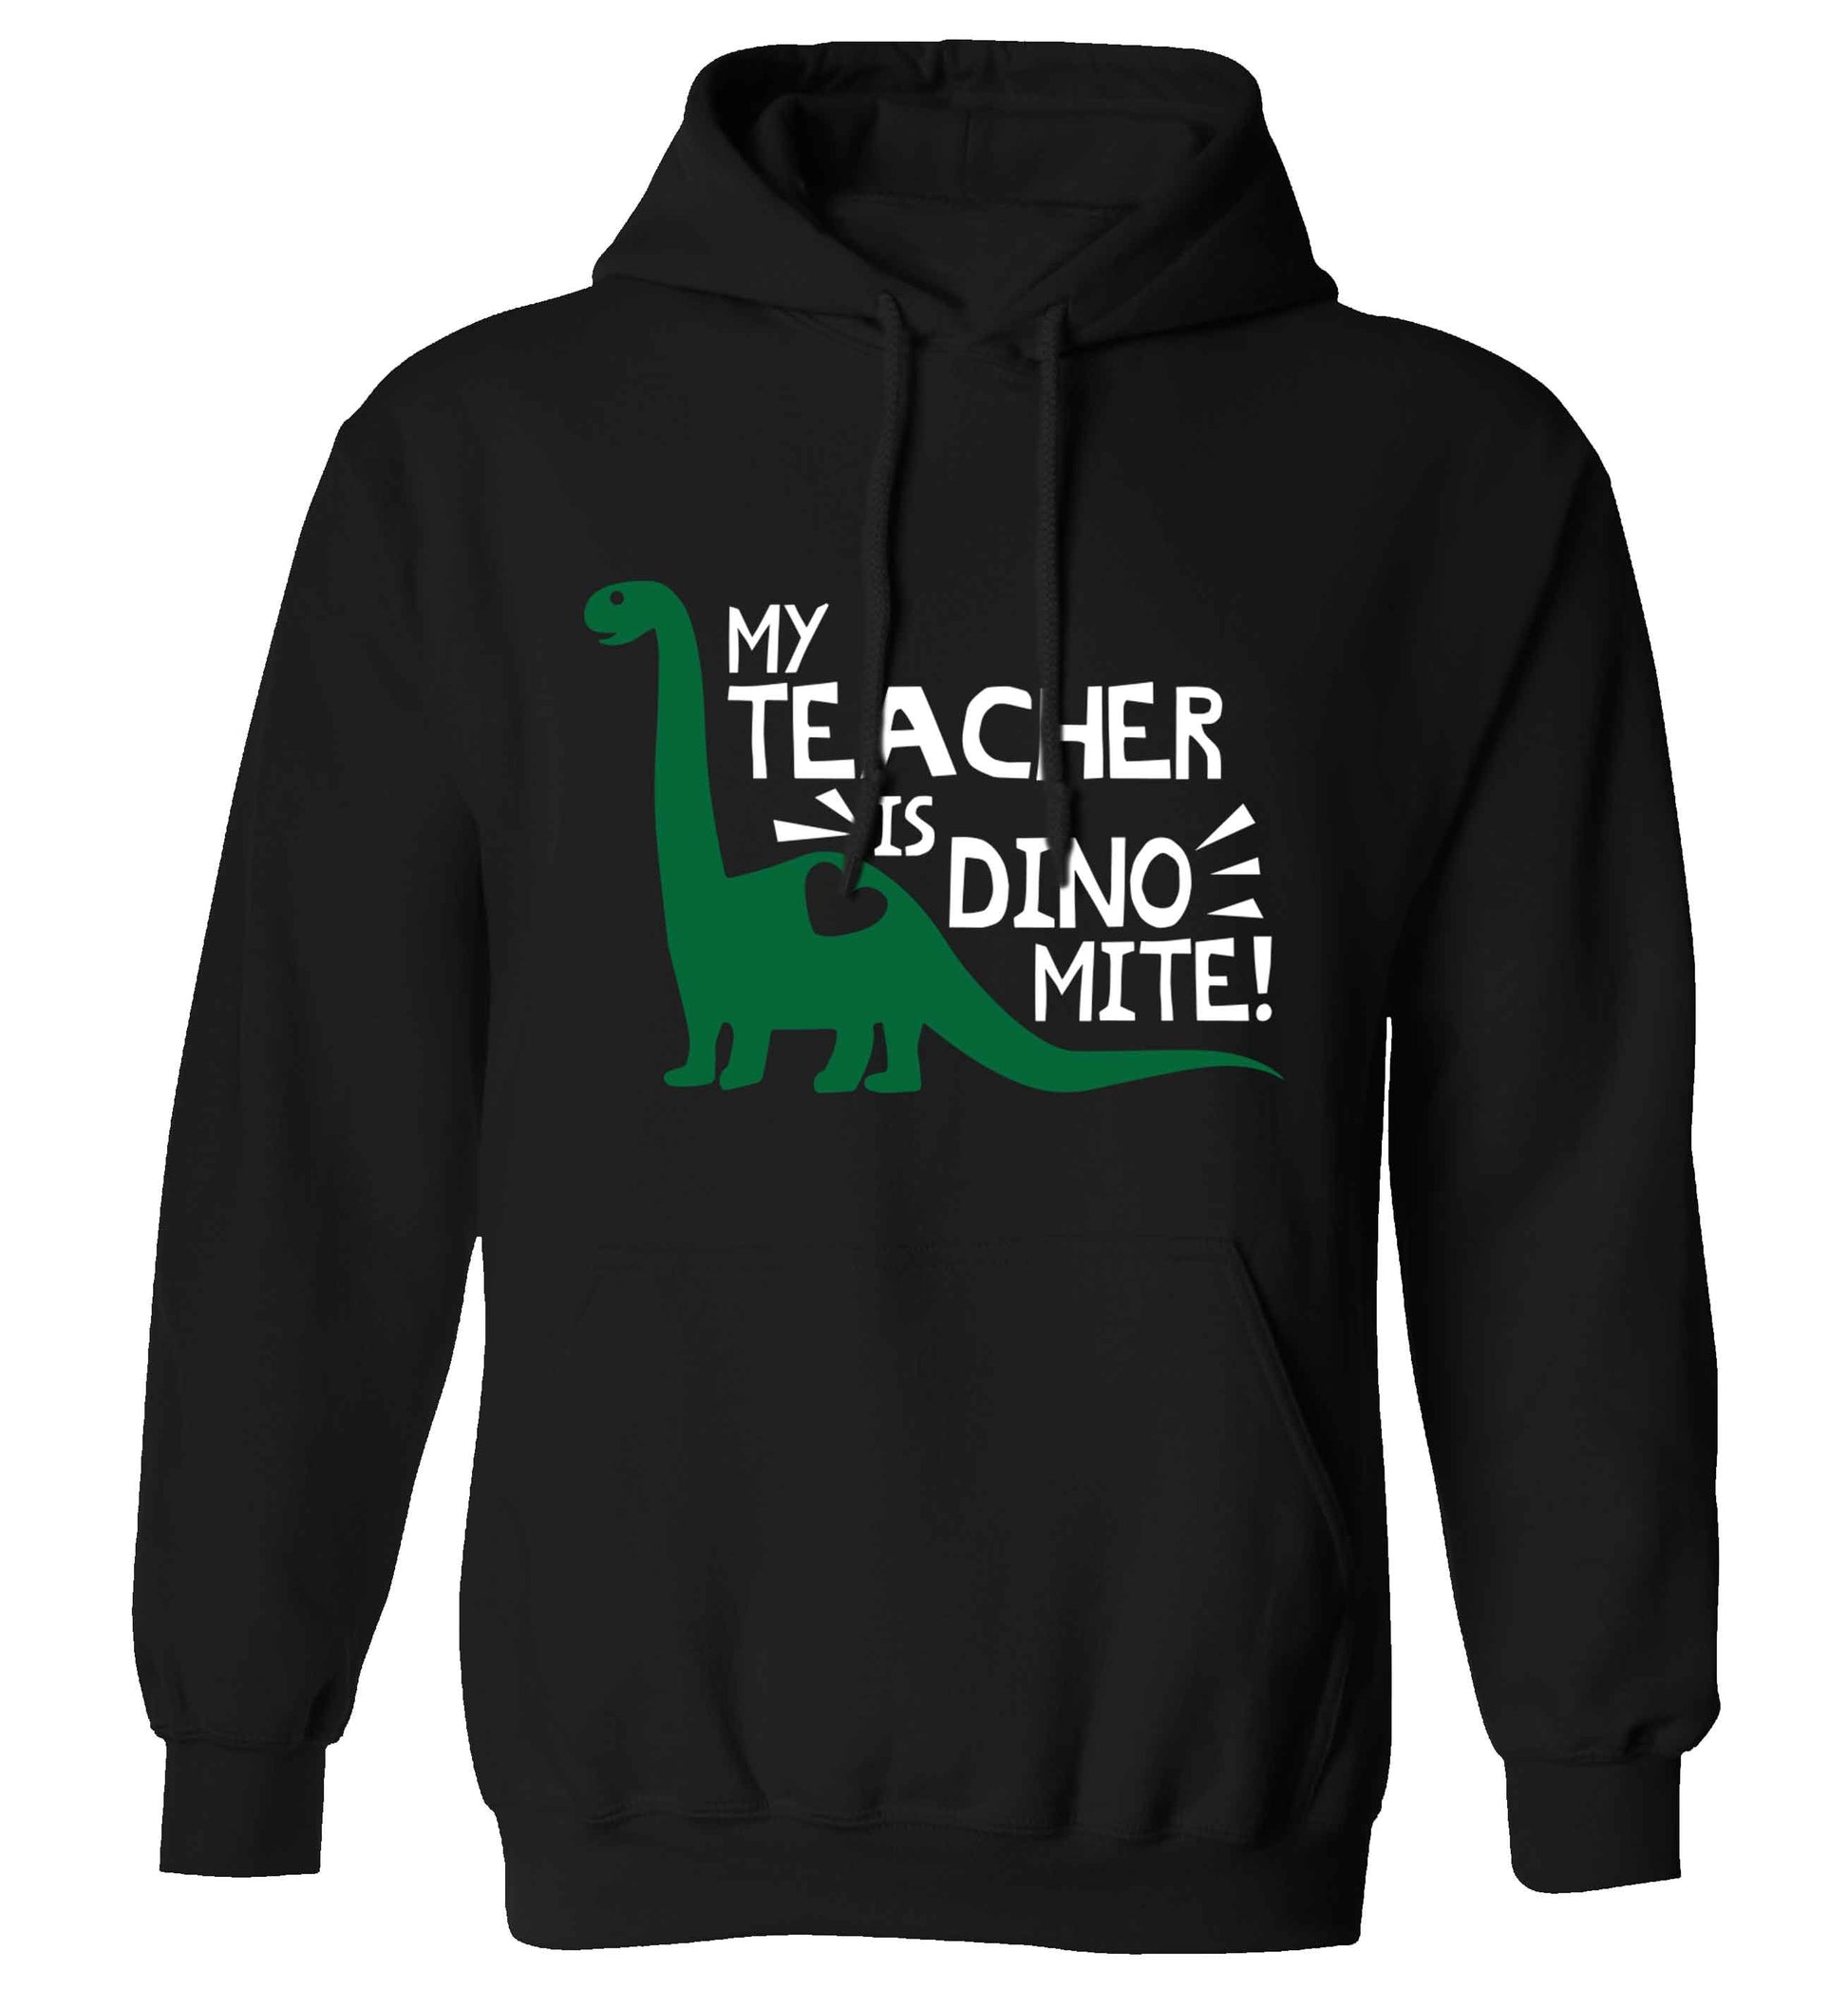 My teacher is dinomite! adults unisex black hoodie 2XL